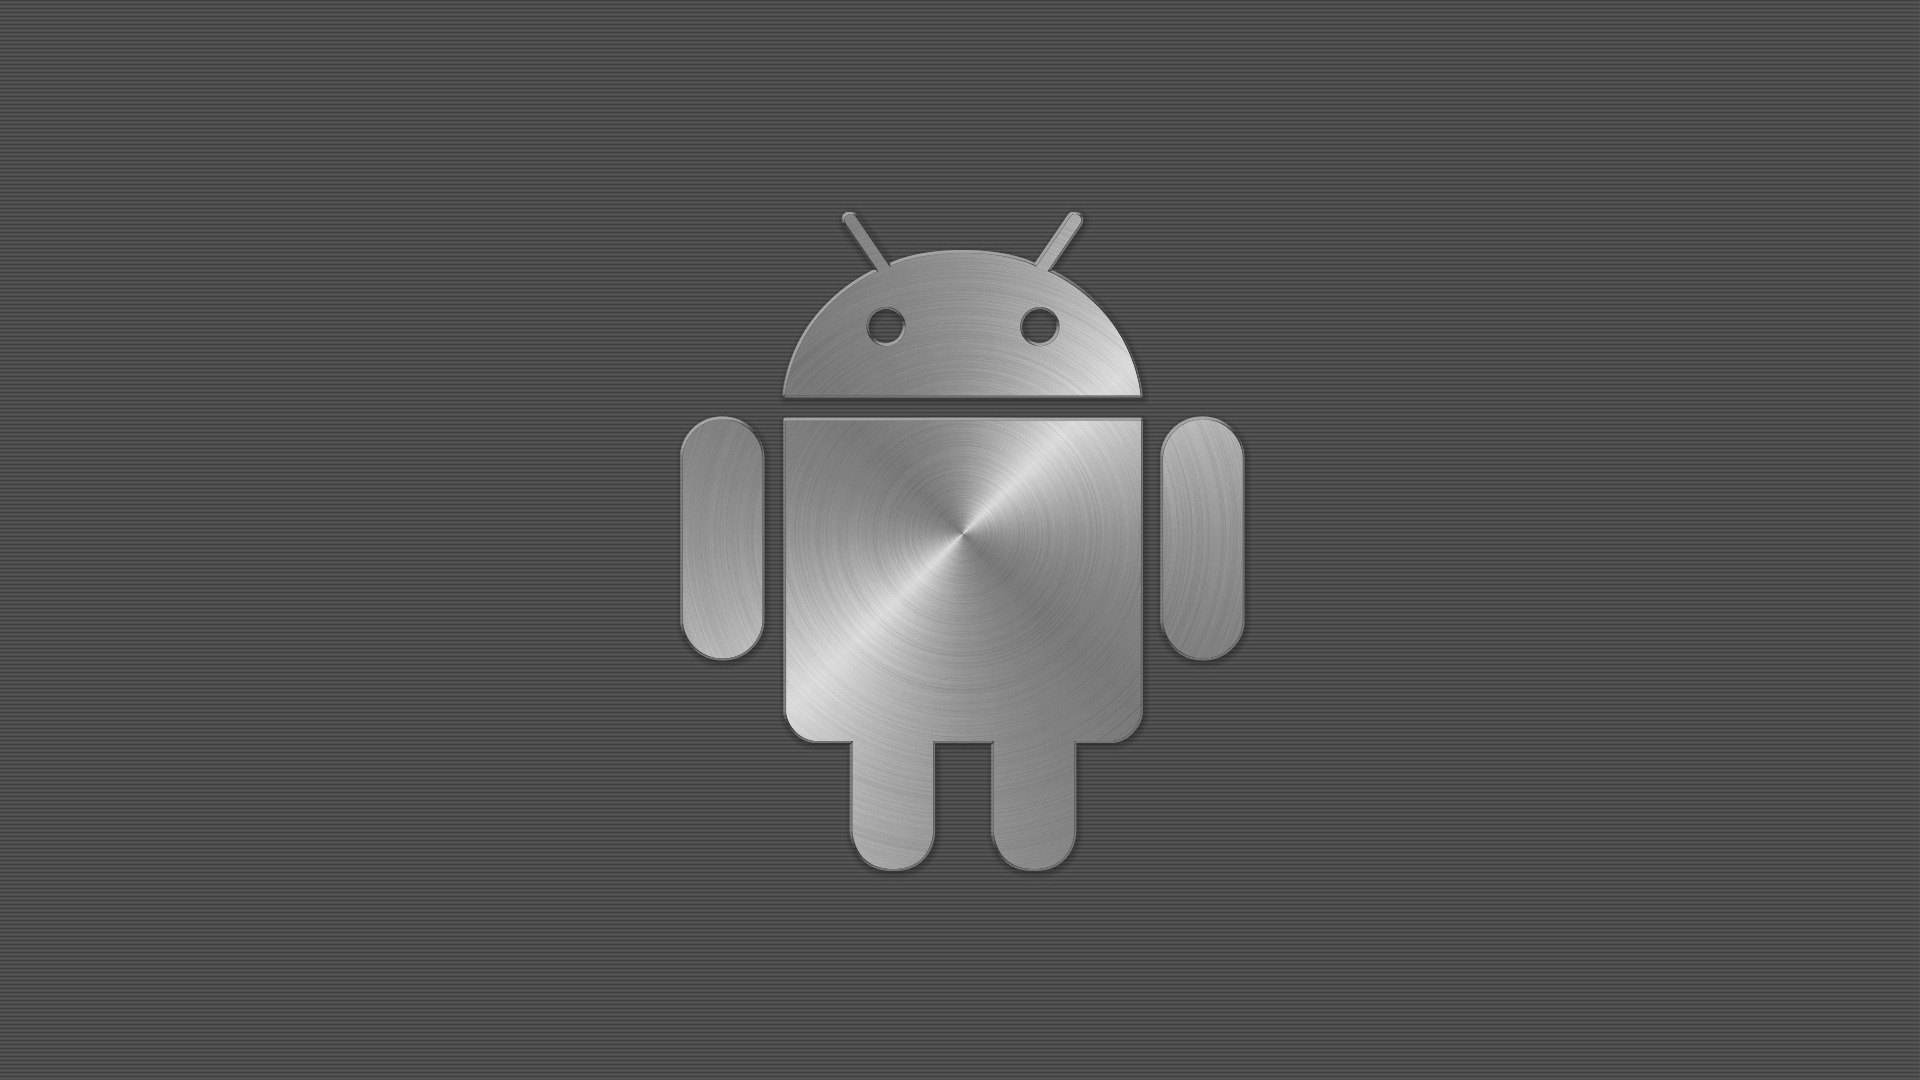  Android  Logo  Wallpapers  HD  PixelsTalk Net